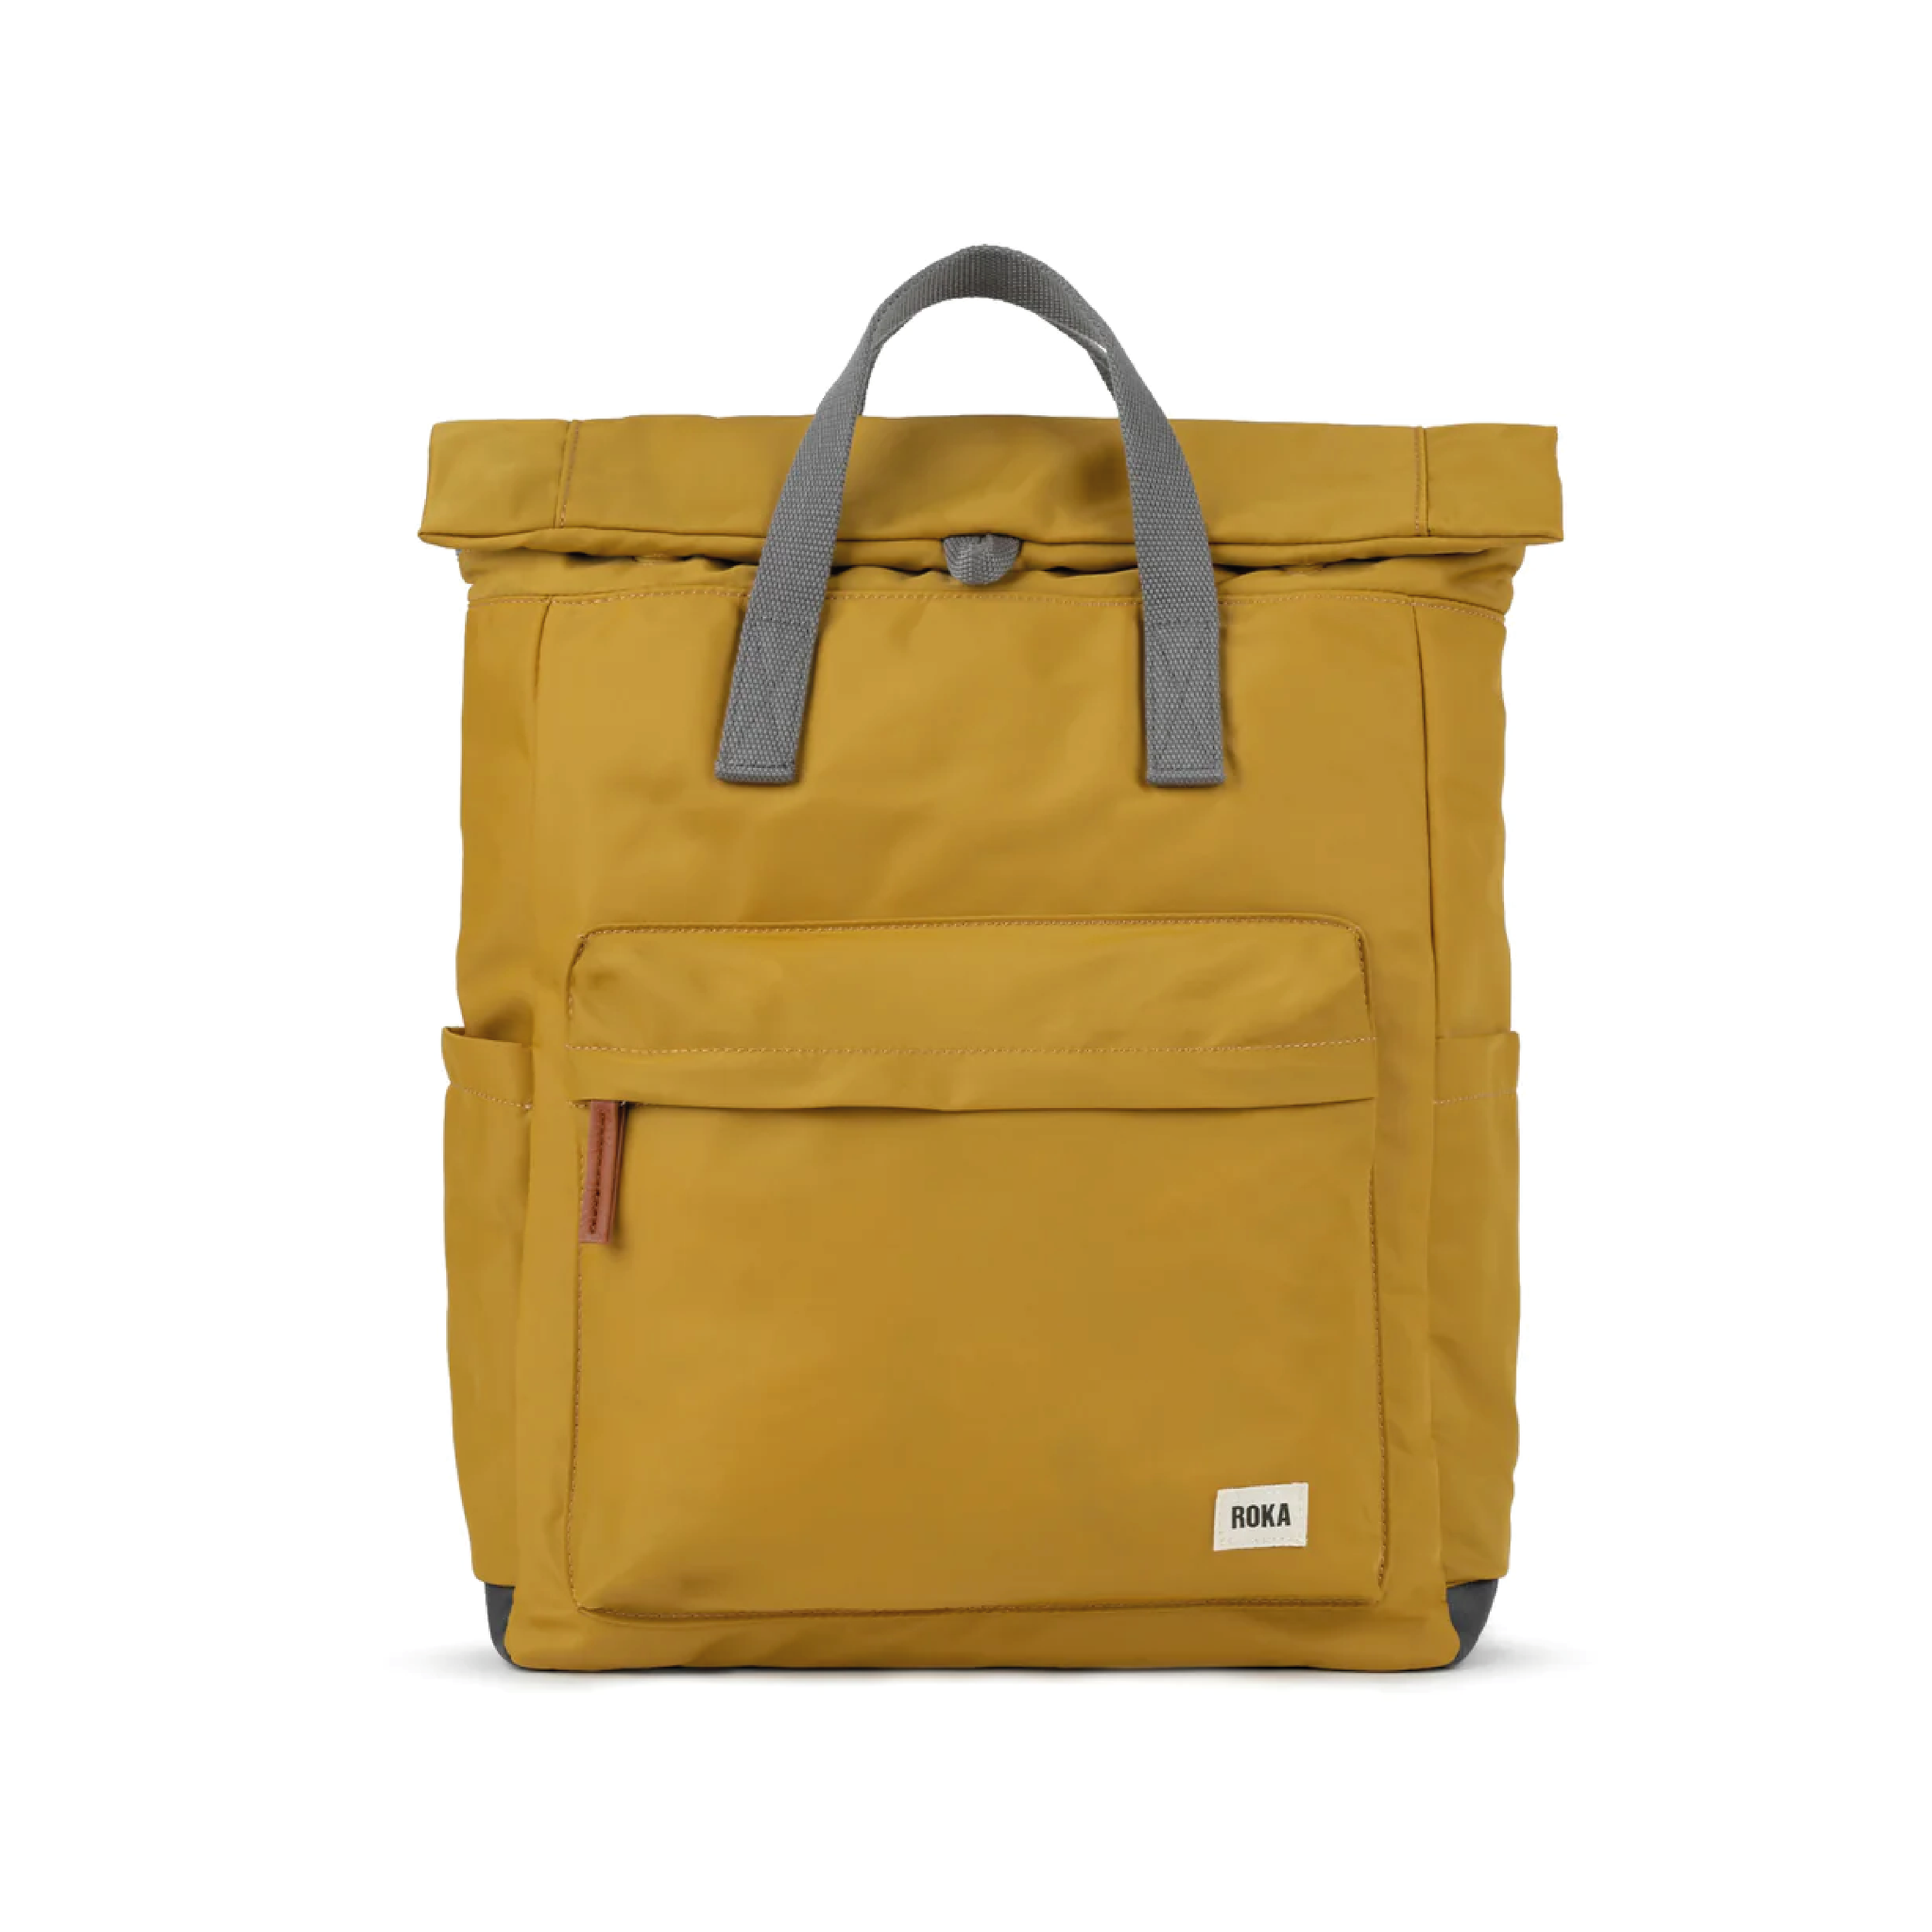 Bags — Brocante Ltd